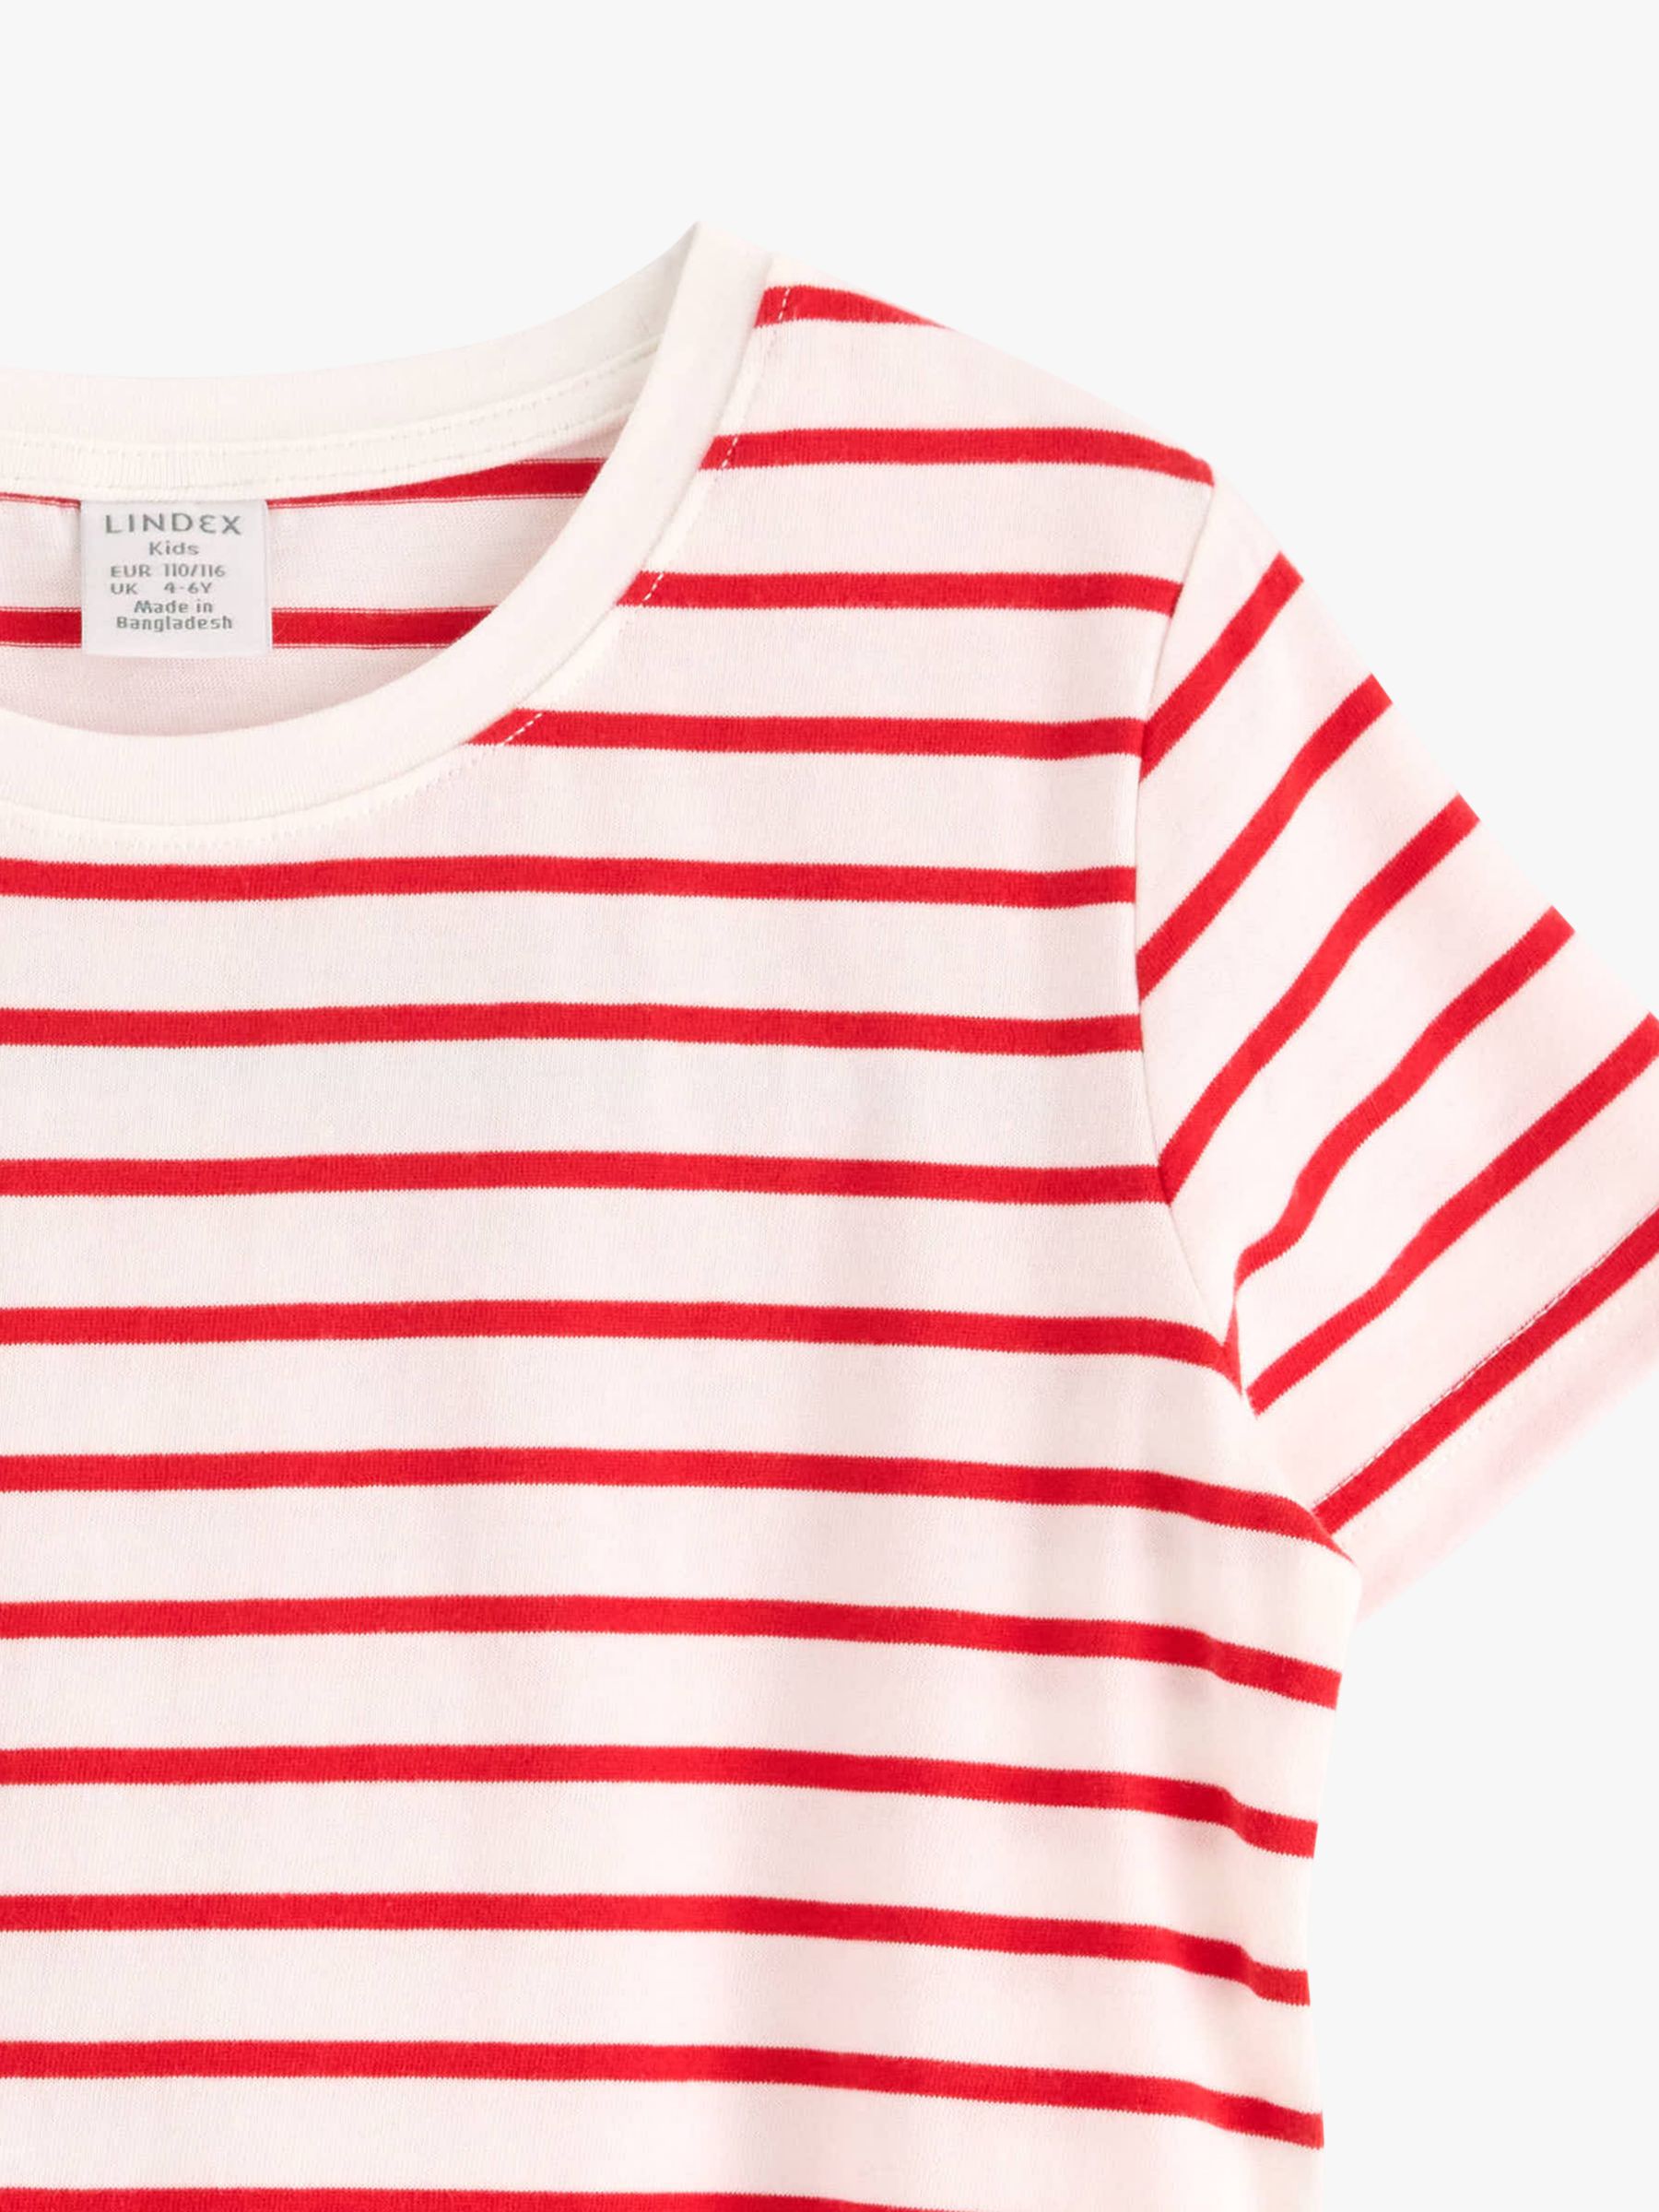 Lindex Kids' Stripe Short Sleeve T-Shirt, Red, 18-24 months